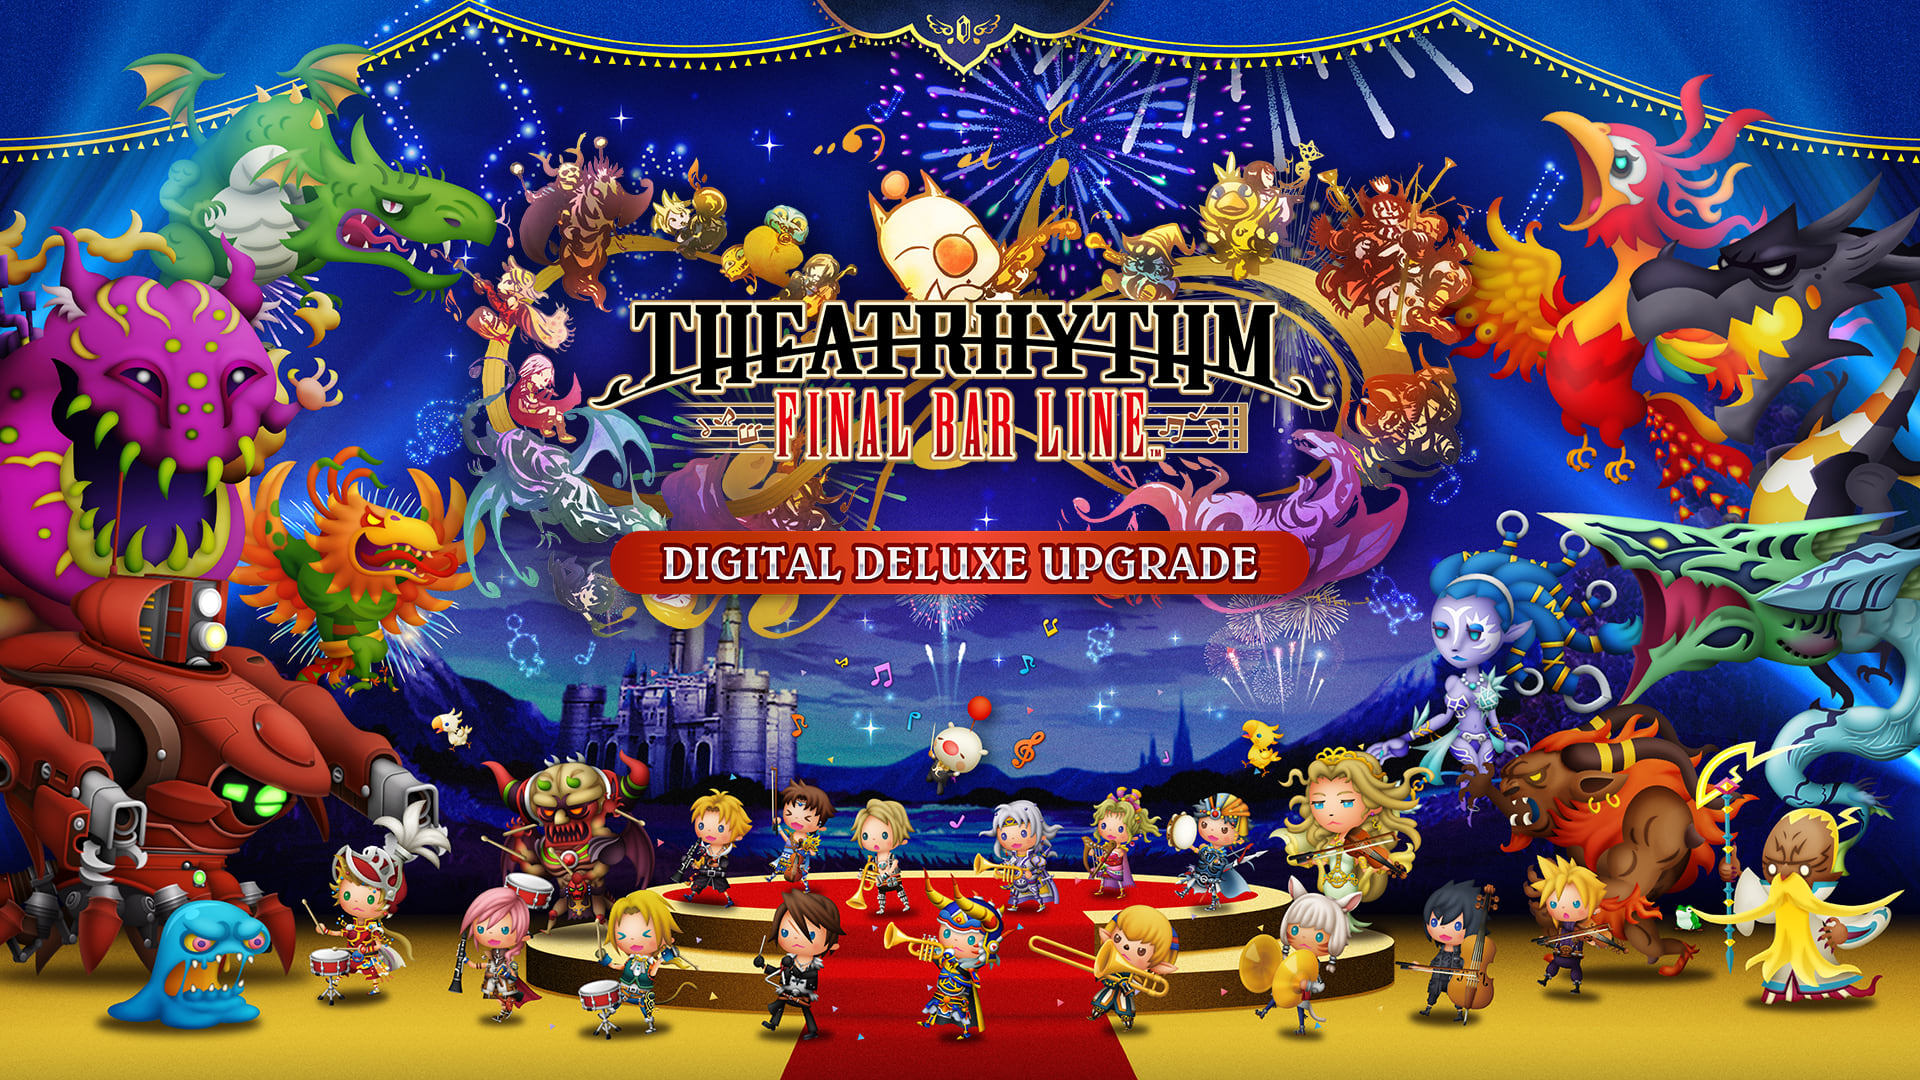 THEATRHYTHM FINAL BAR LINE Digital Deluxe Upgrade